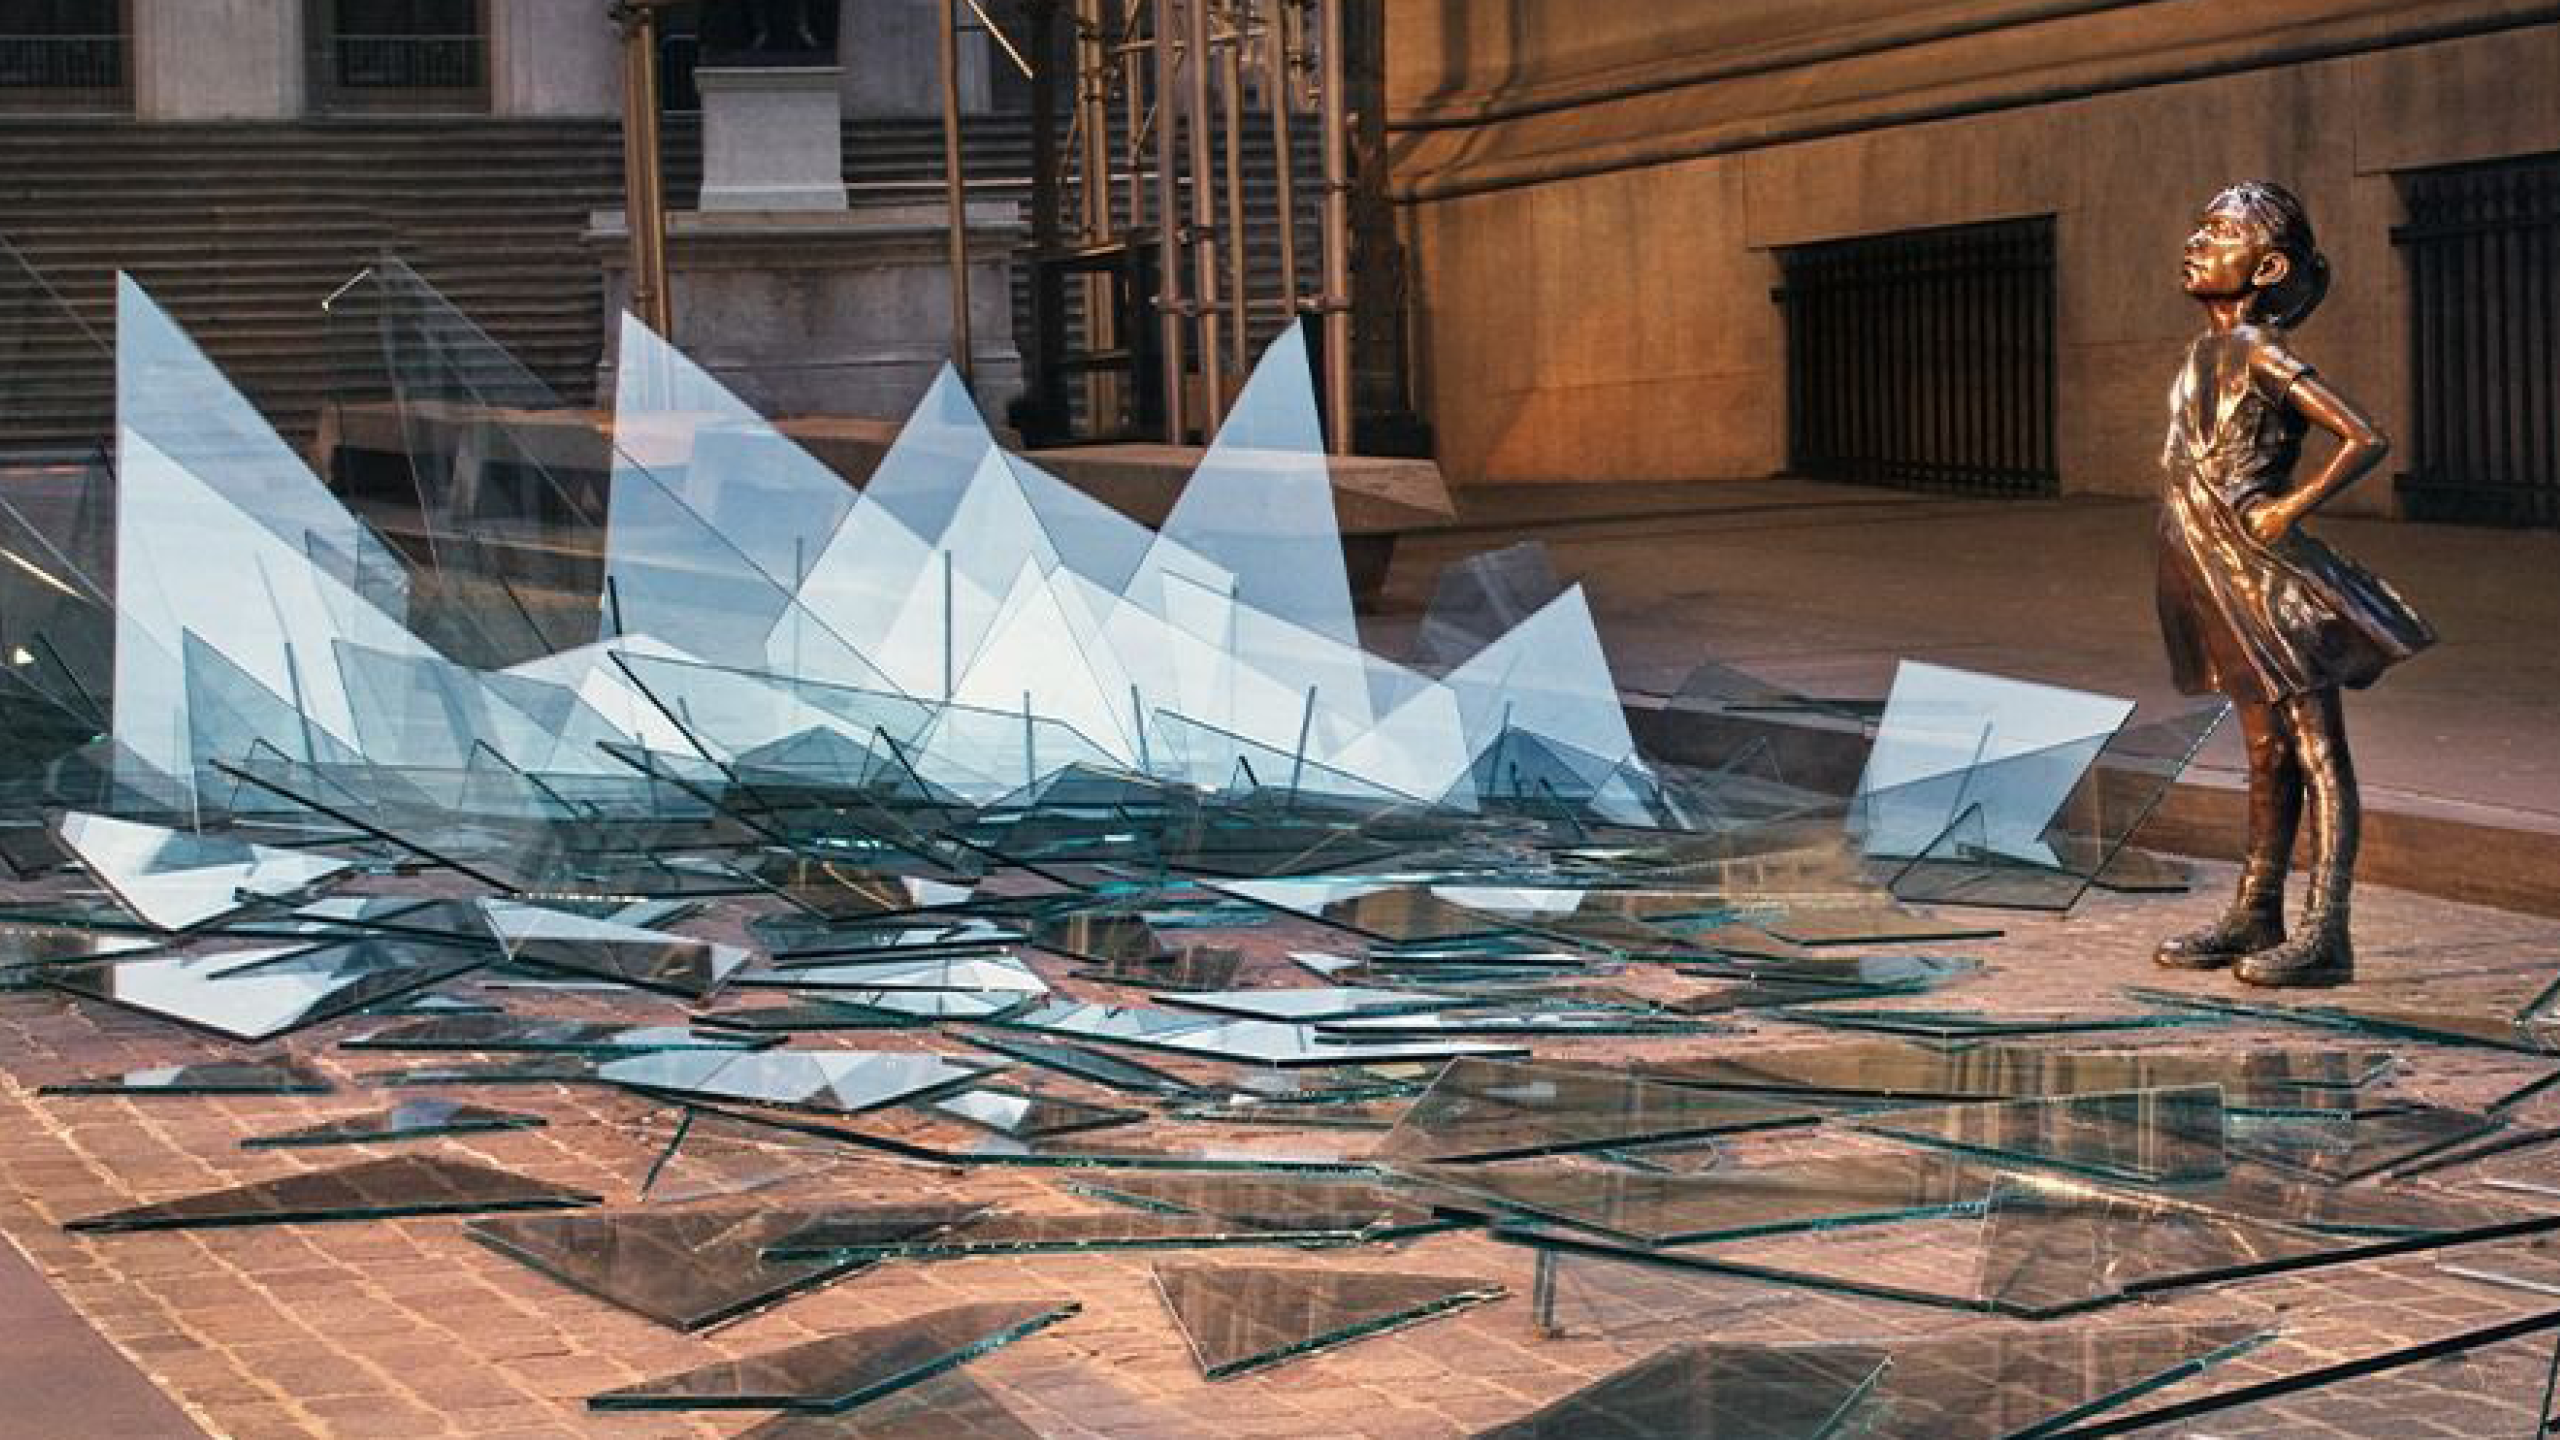 AGNORA Fabricates Glass for Fearless Girl – Broken Ceiling Art Exhibit